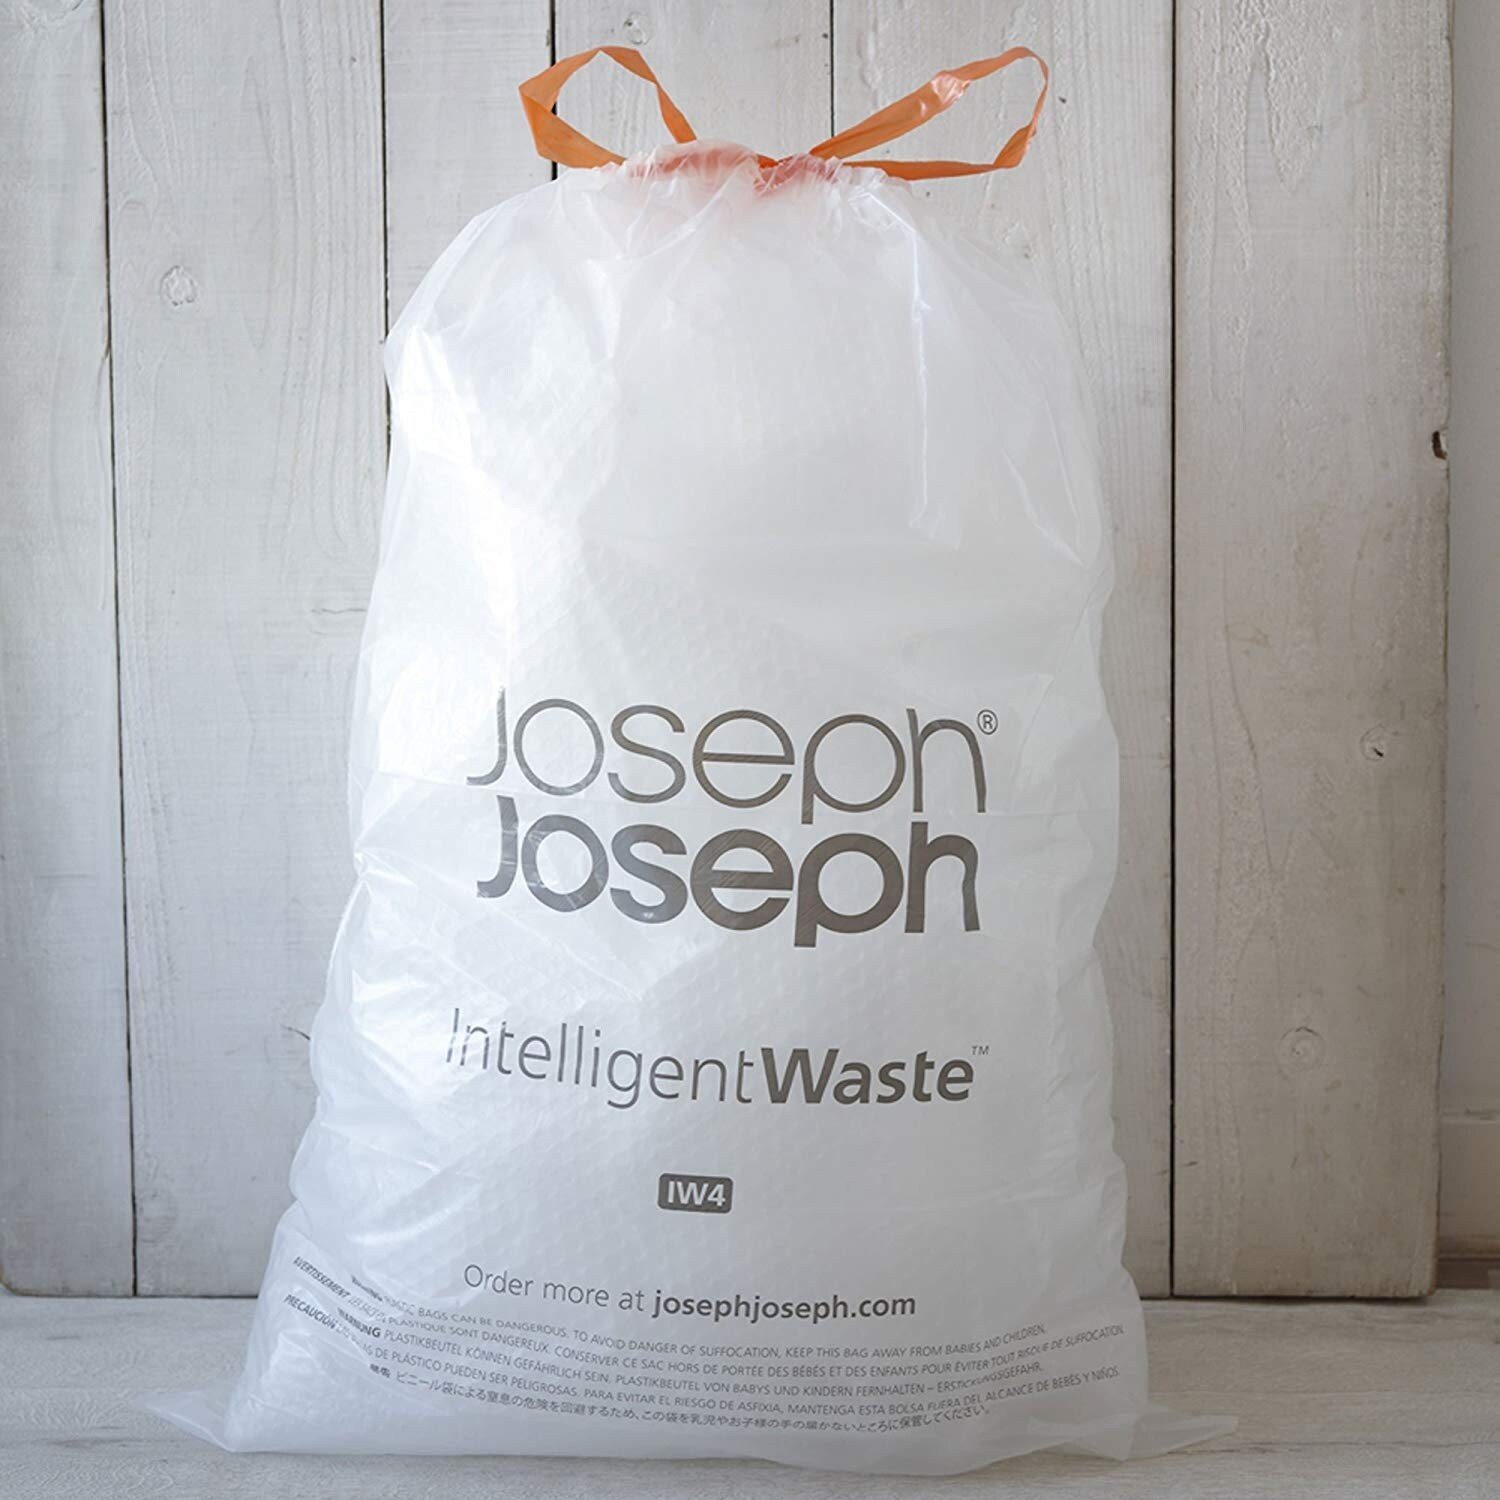 Joseph Joseph Titan Trash Compactor vs the Totem Bin